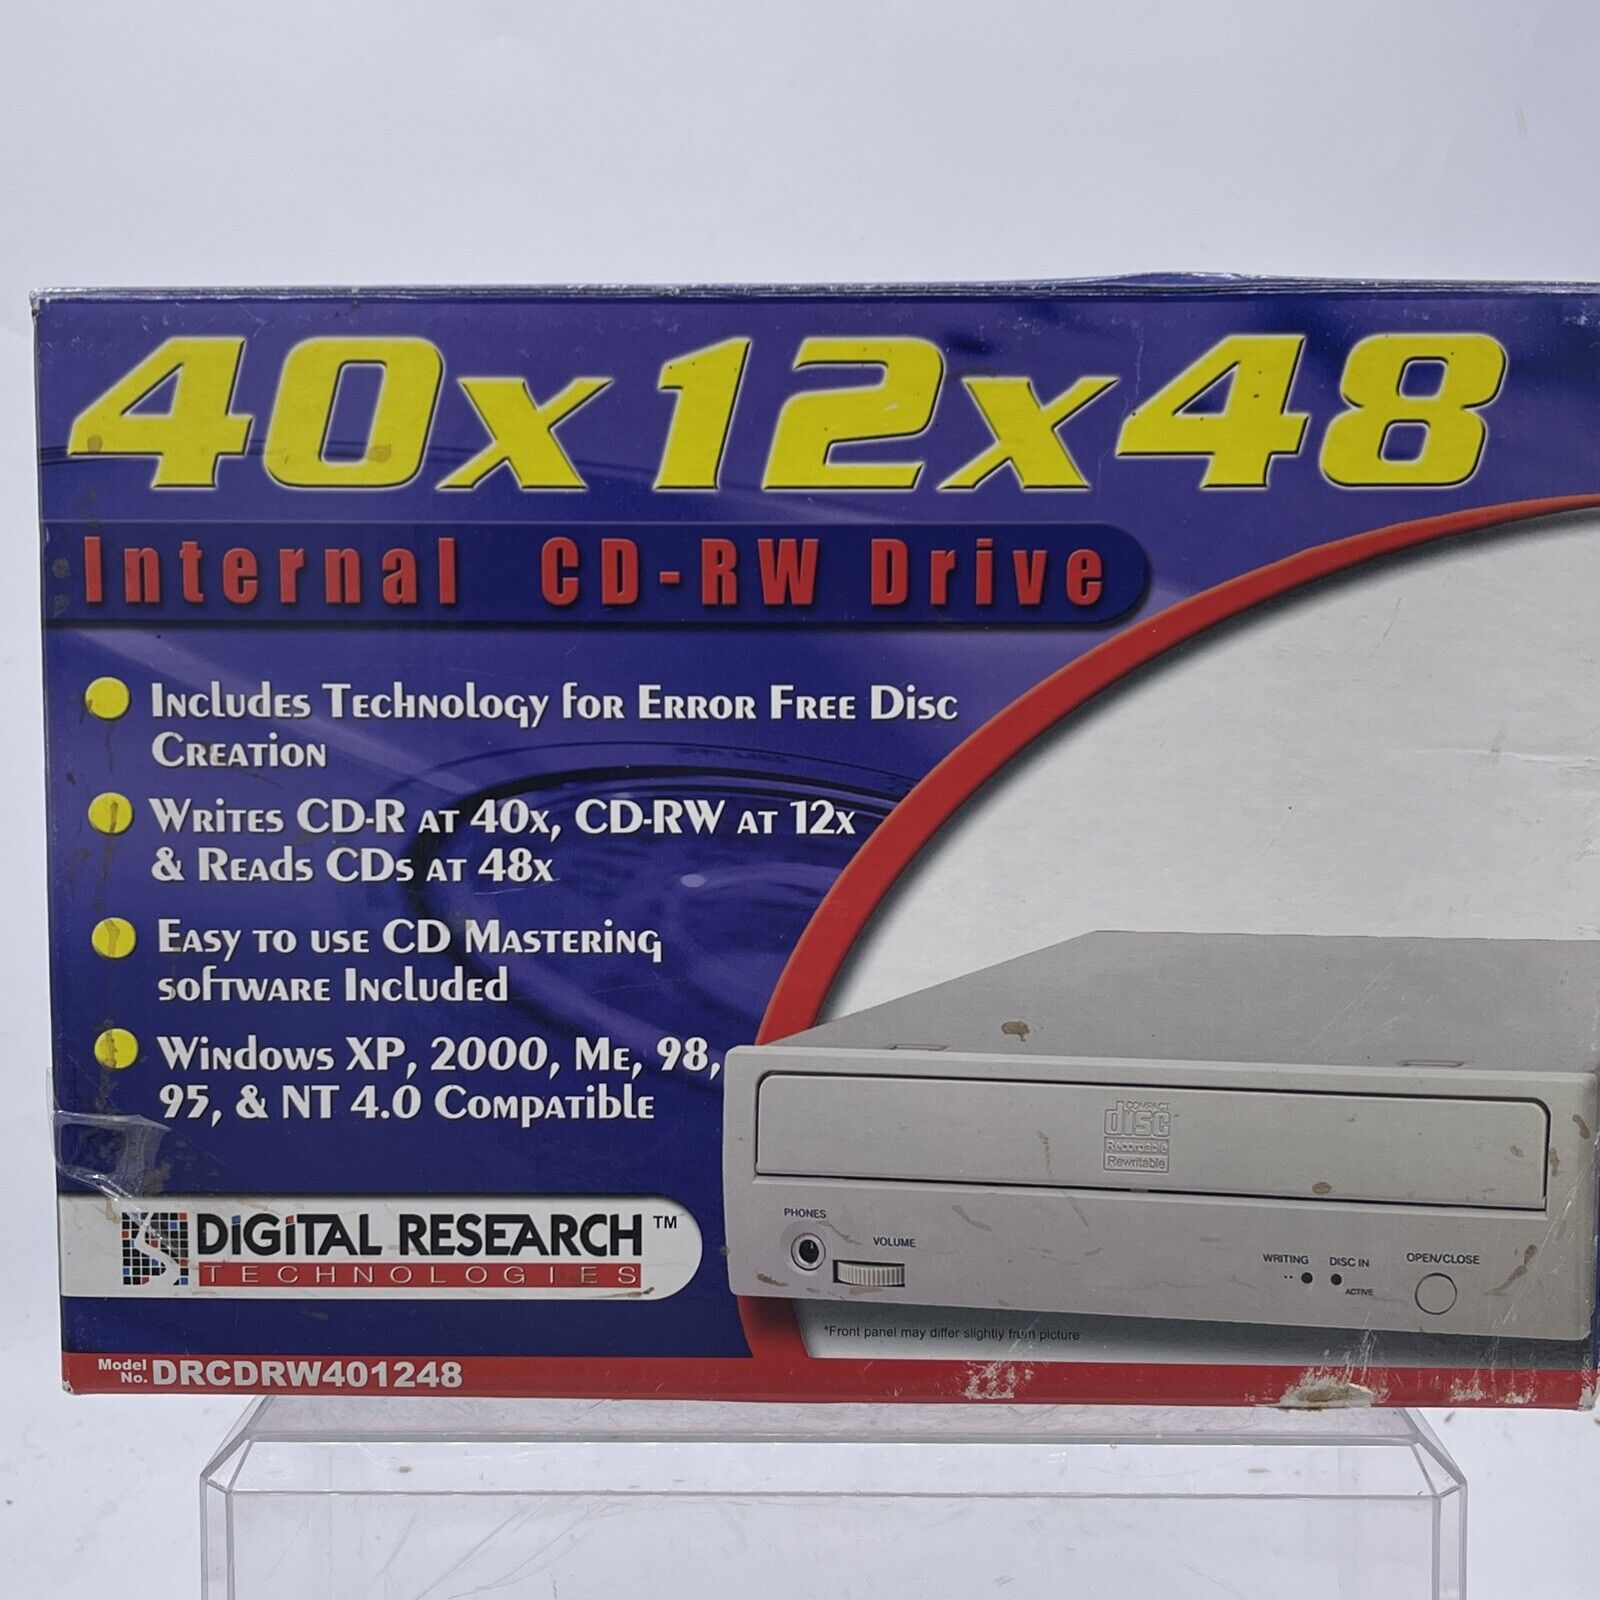 Digital Research Technologies - Internal CD-RW Drive 40x12x48 Model DRCDRW401248